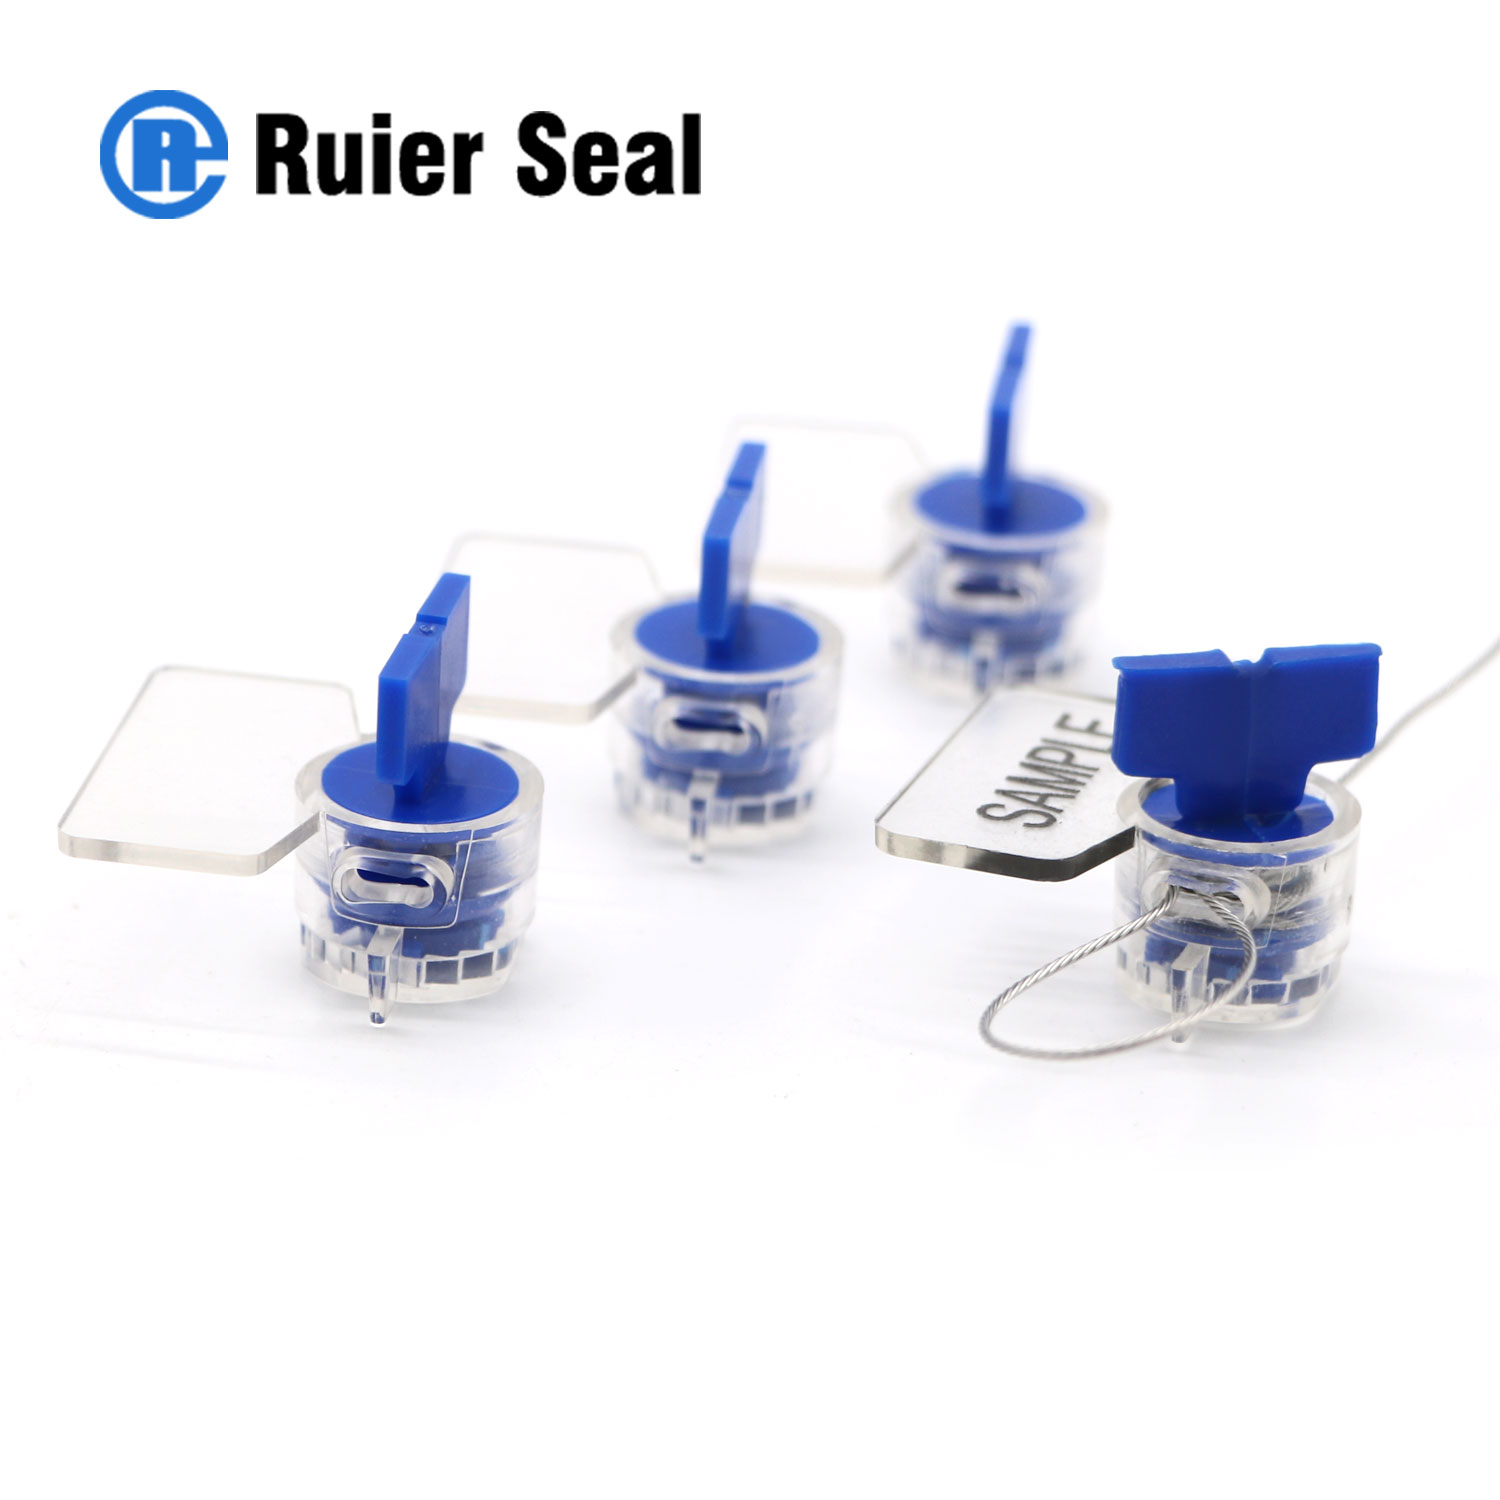 stilte Pessimistisch mijn REM104 meter security seals meter seal electric meter lock ring-Products  Center-Shandong Ruier Seal Co., Ltd.